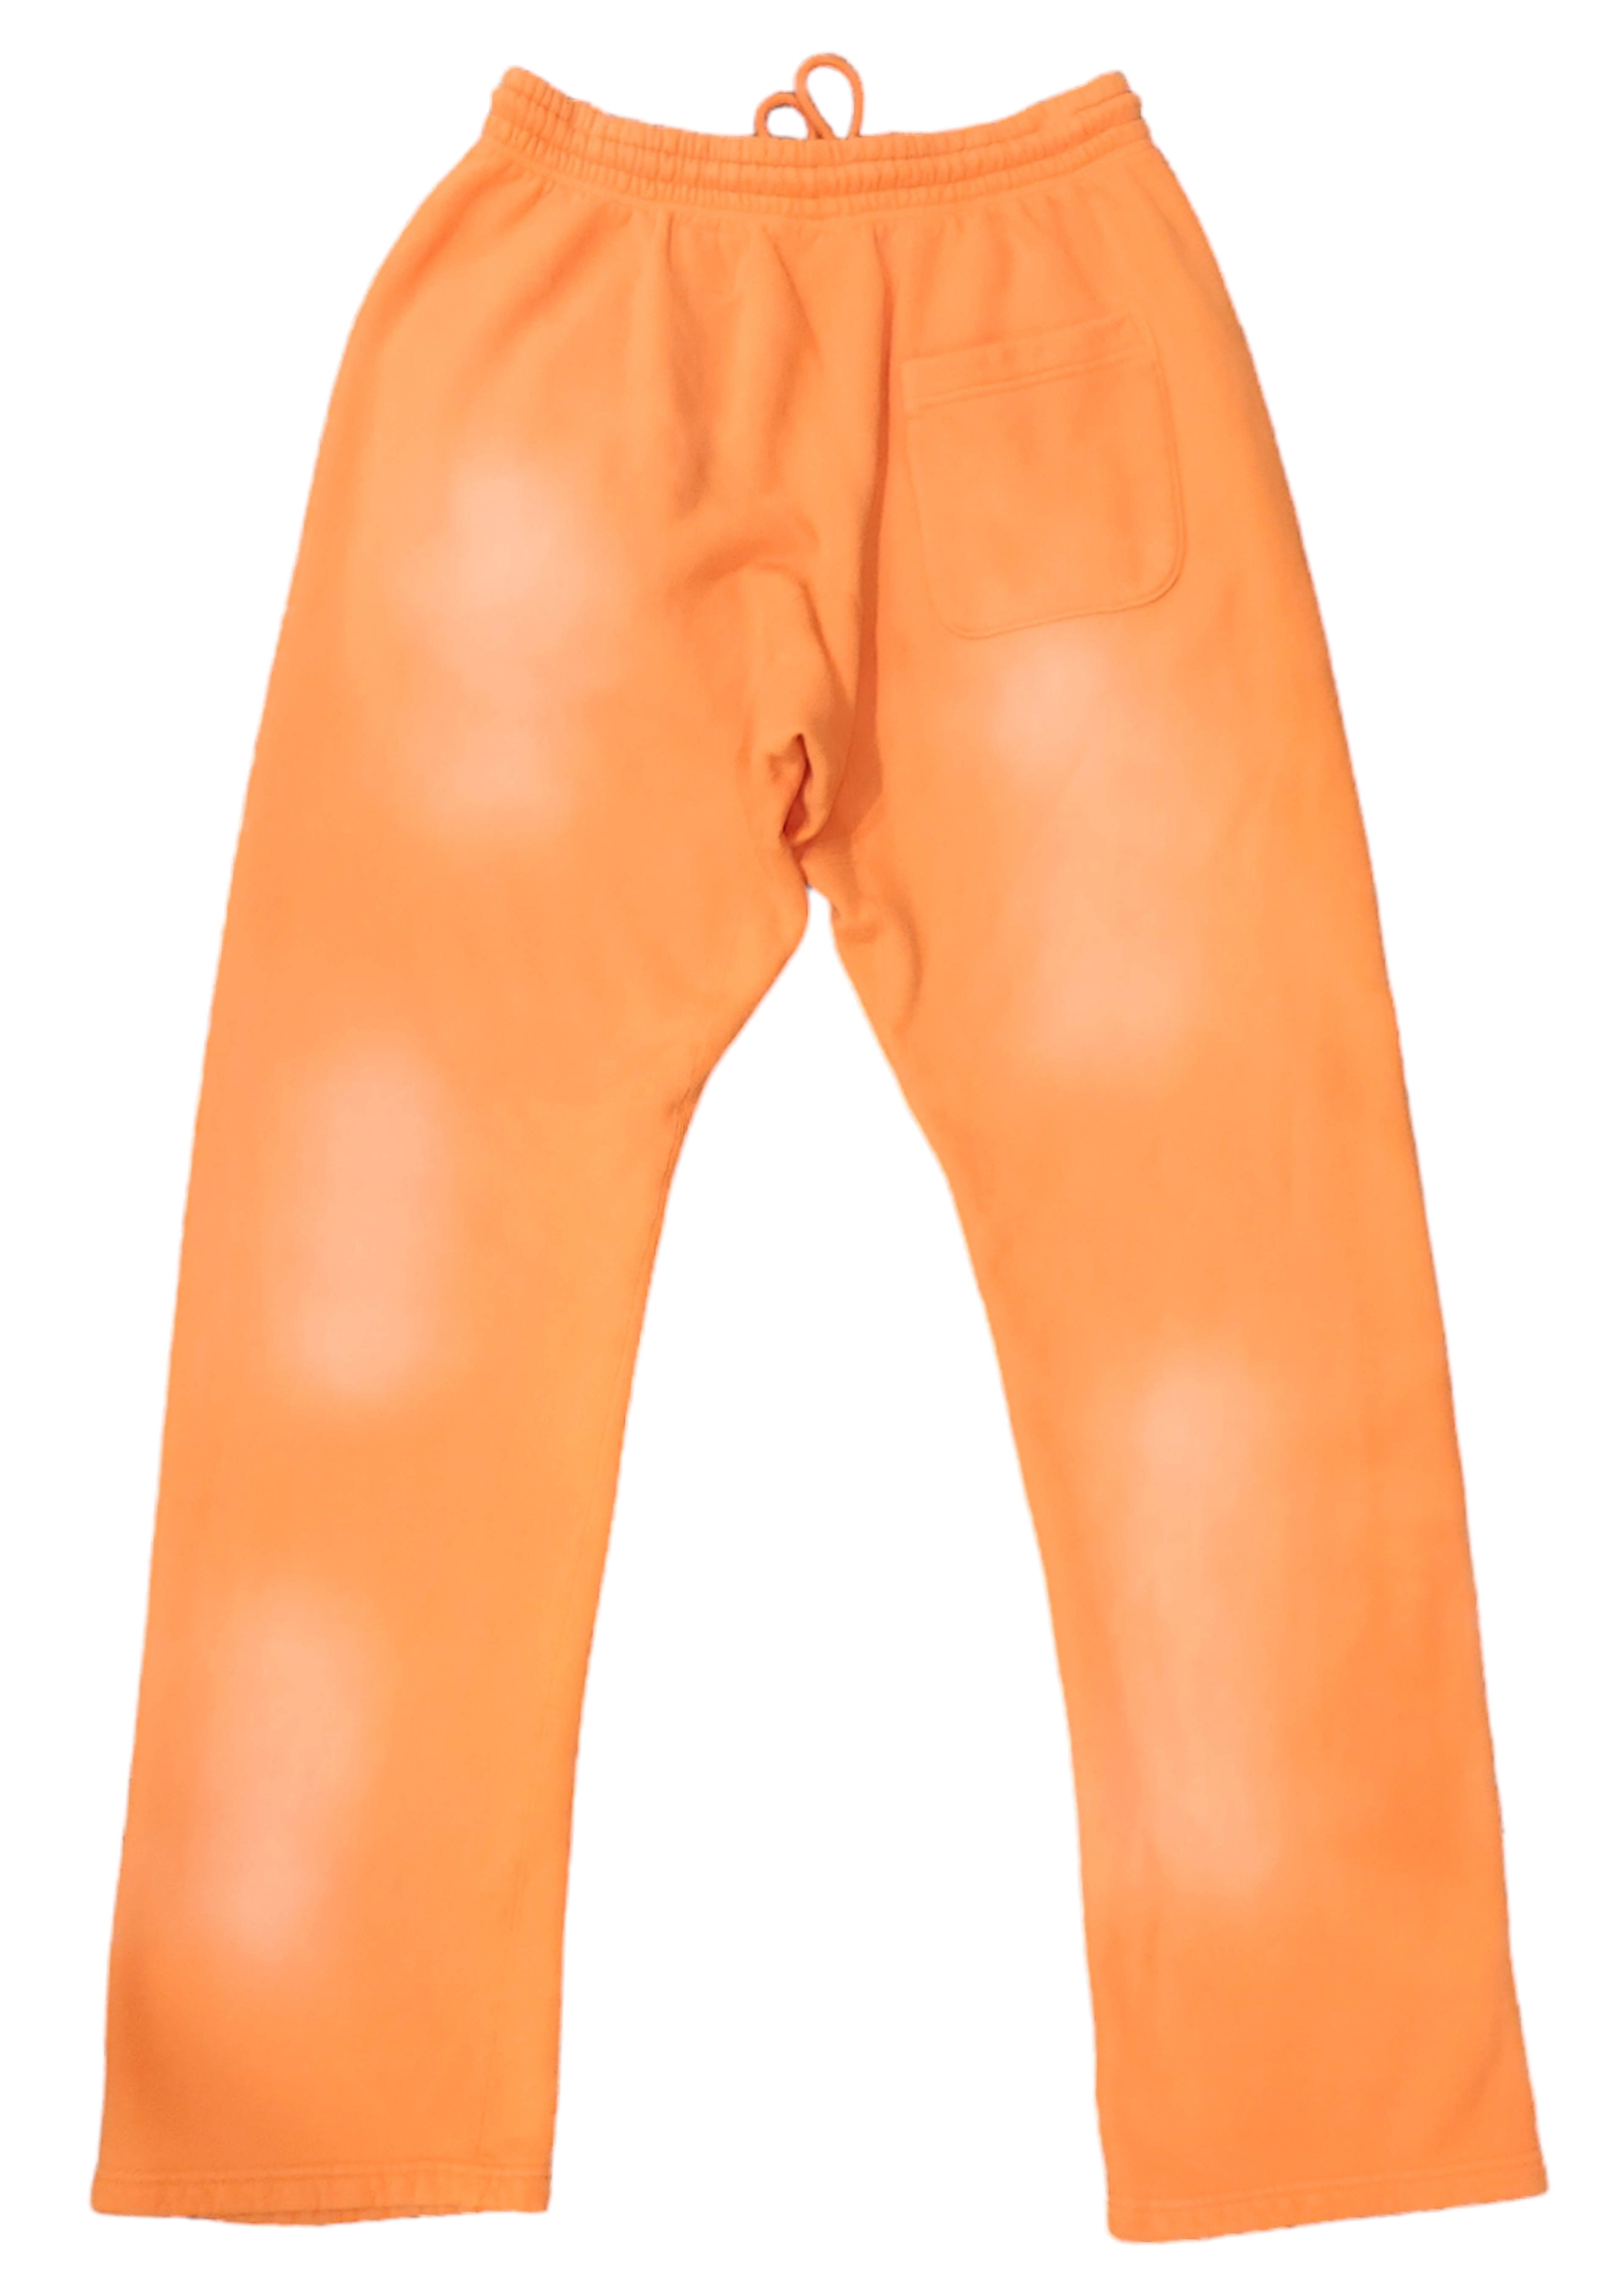 Alternate View 1 of Hellstar "Orange Flare" Sweatpants